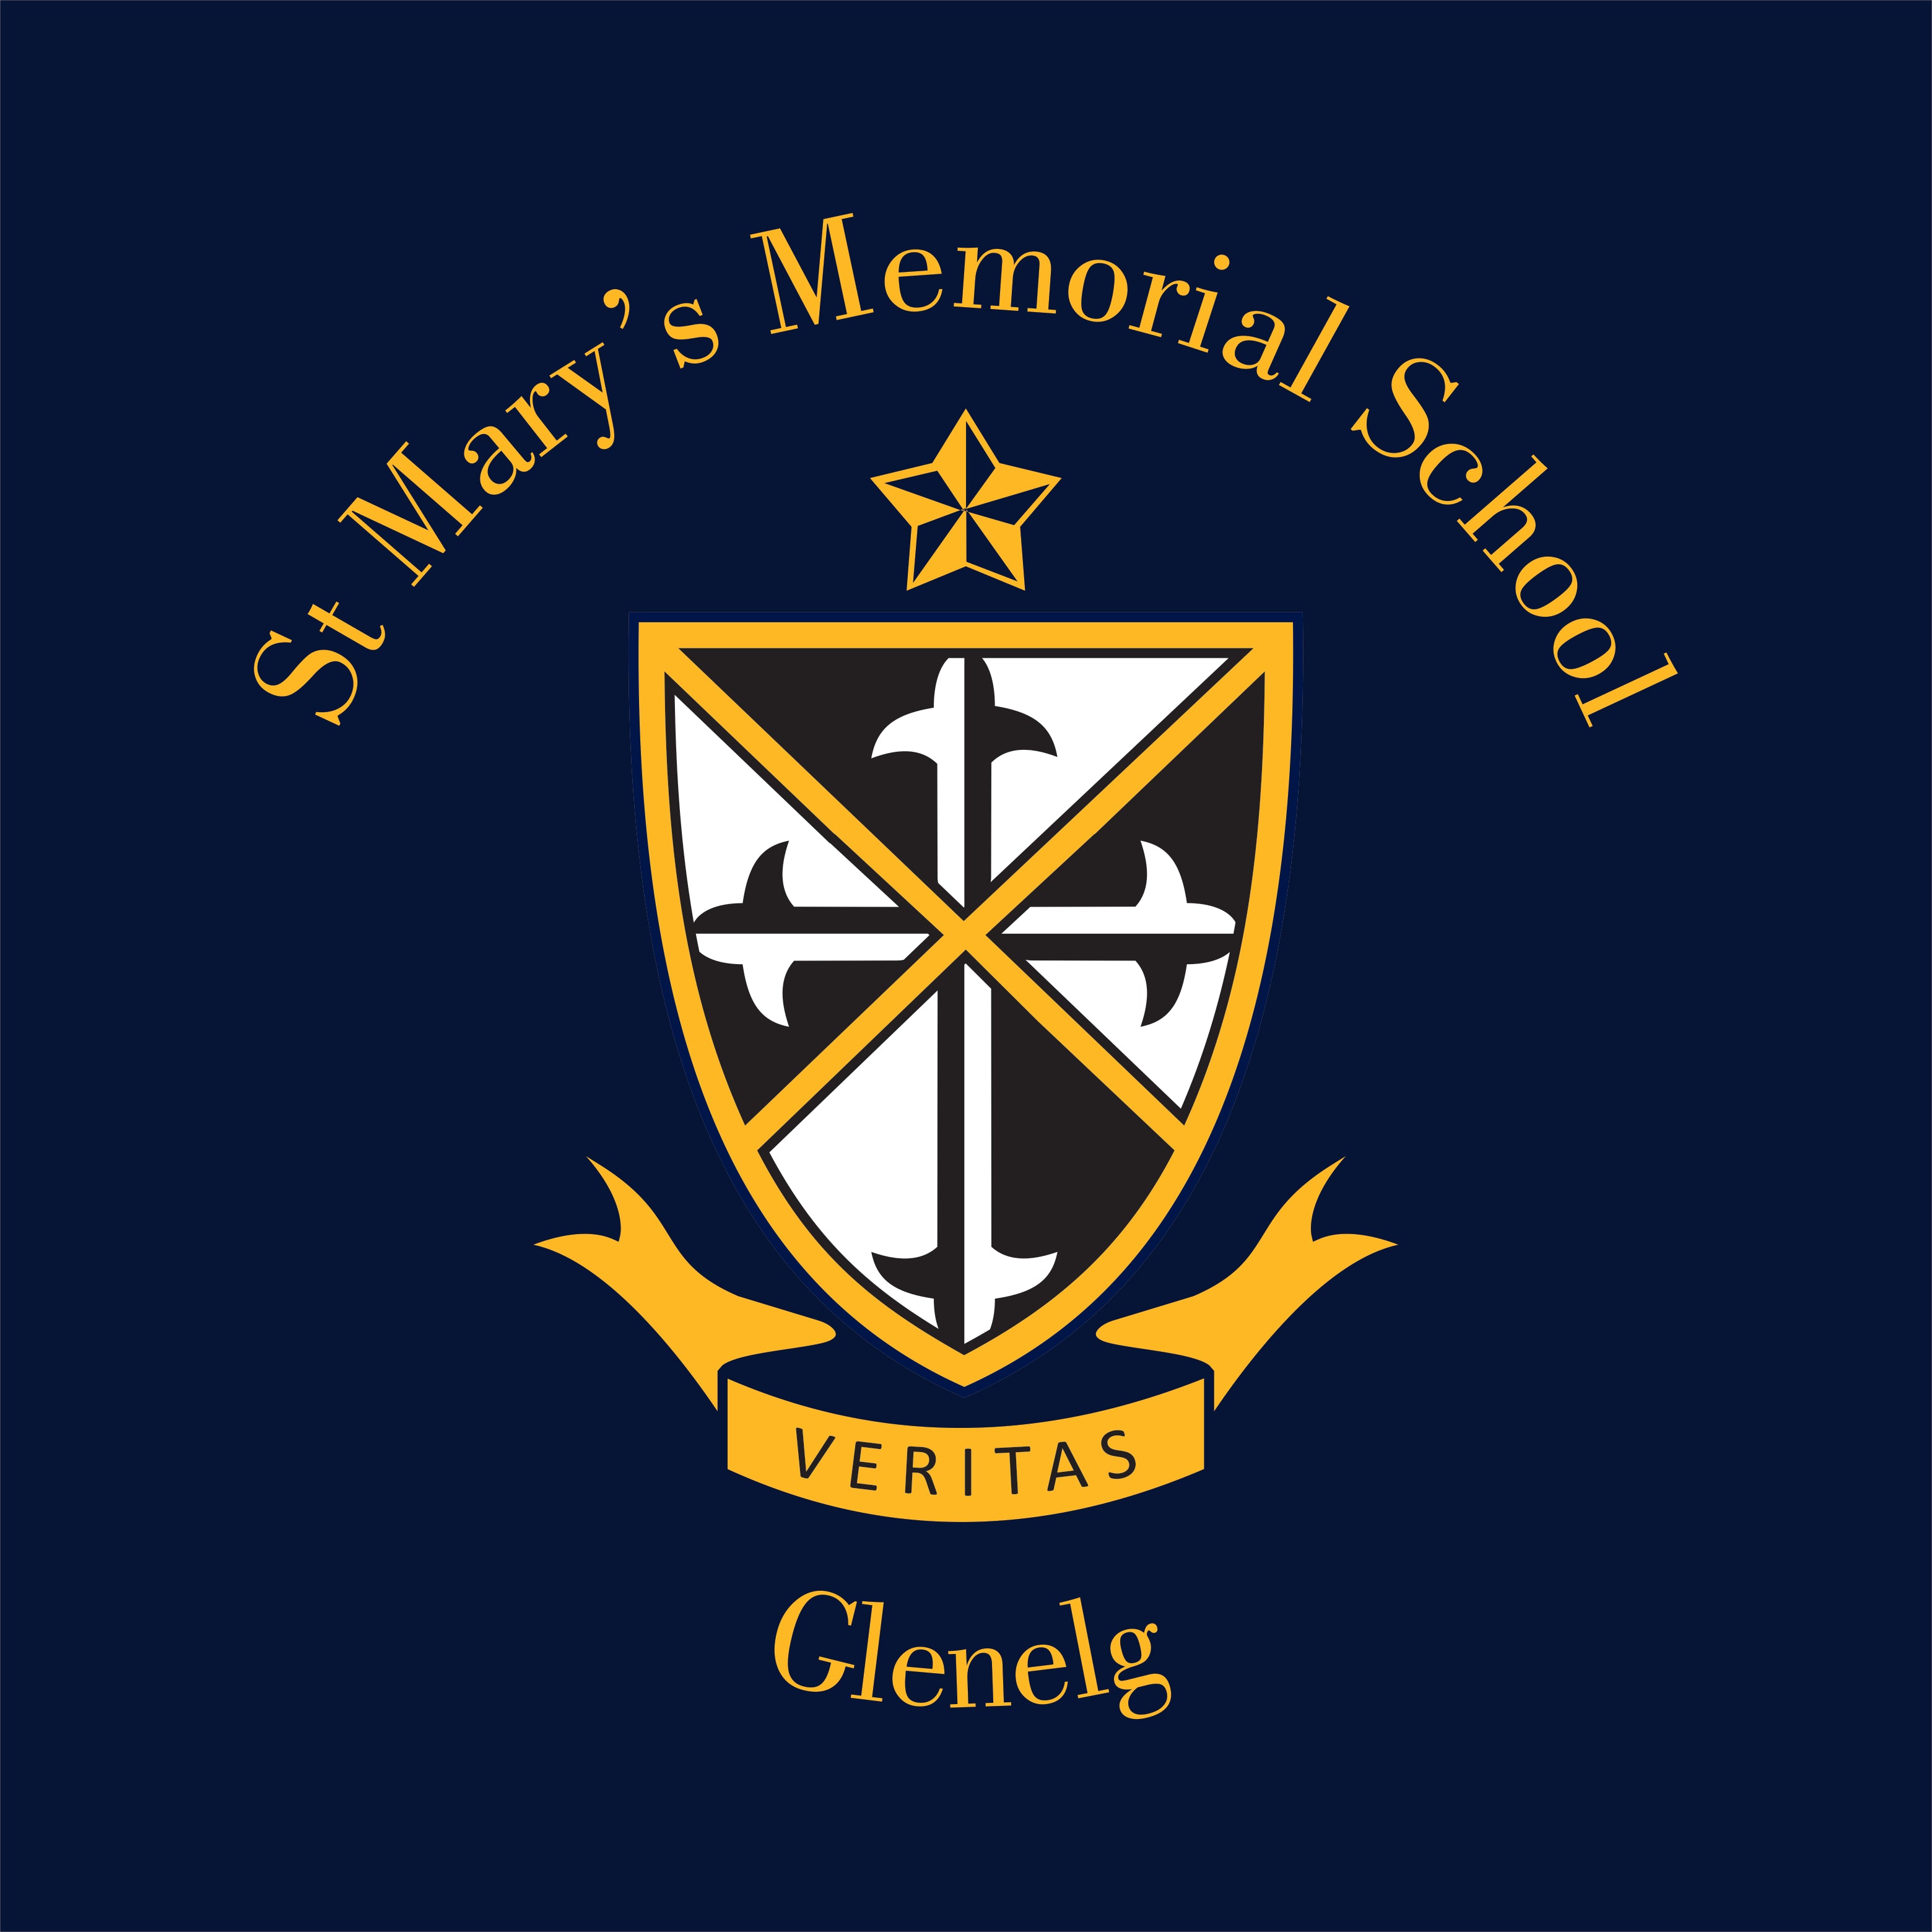 St Marys Memorial School Glenelg - Commemorative